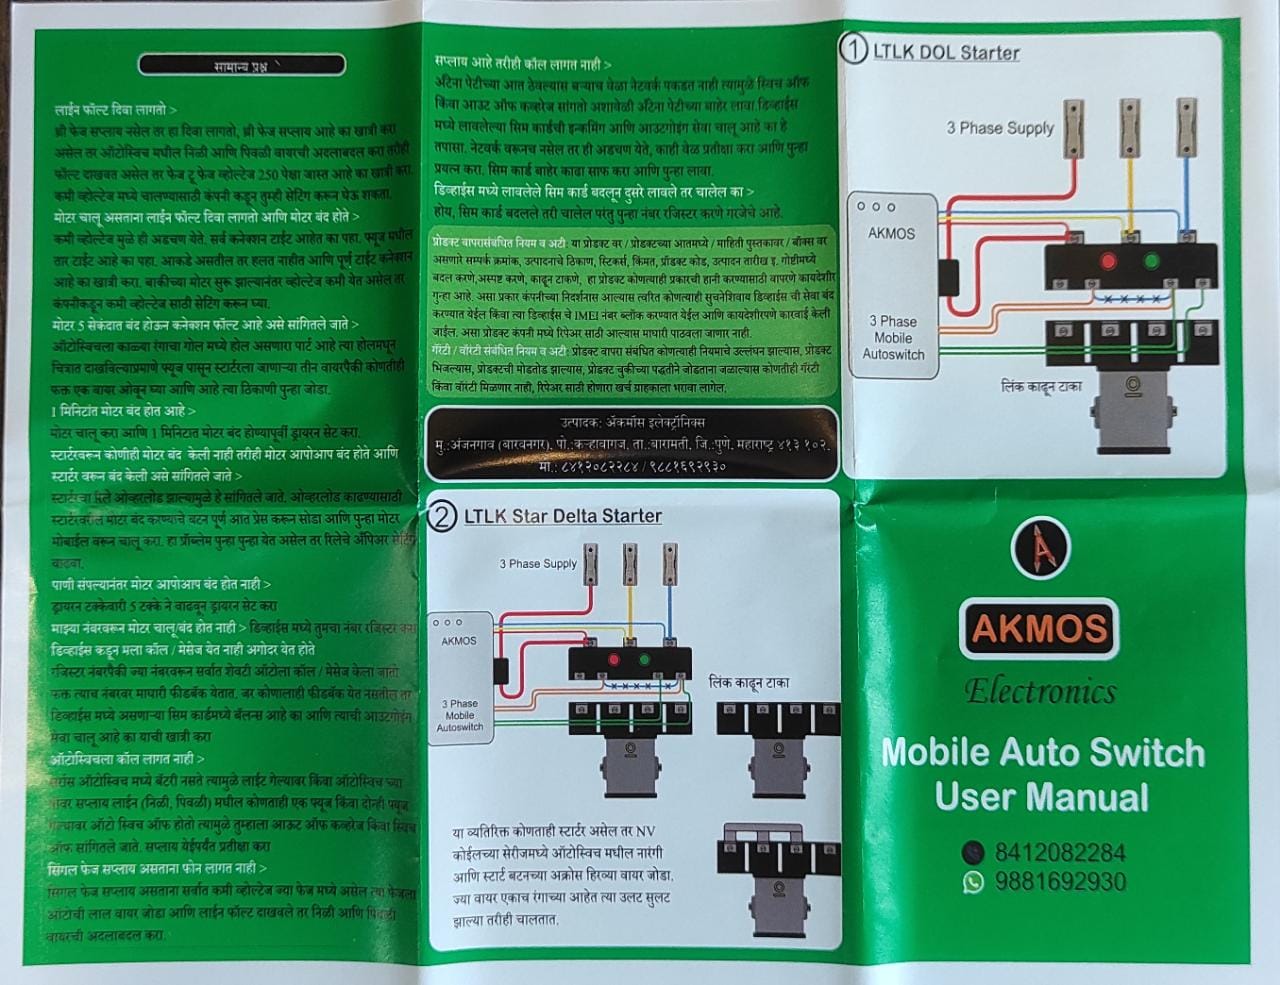 AKMOS Mobile Pump Auto Switch (Starter)